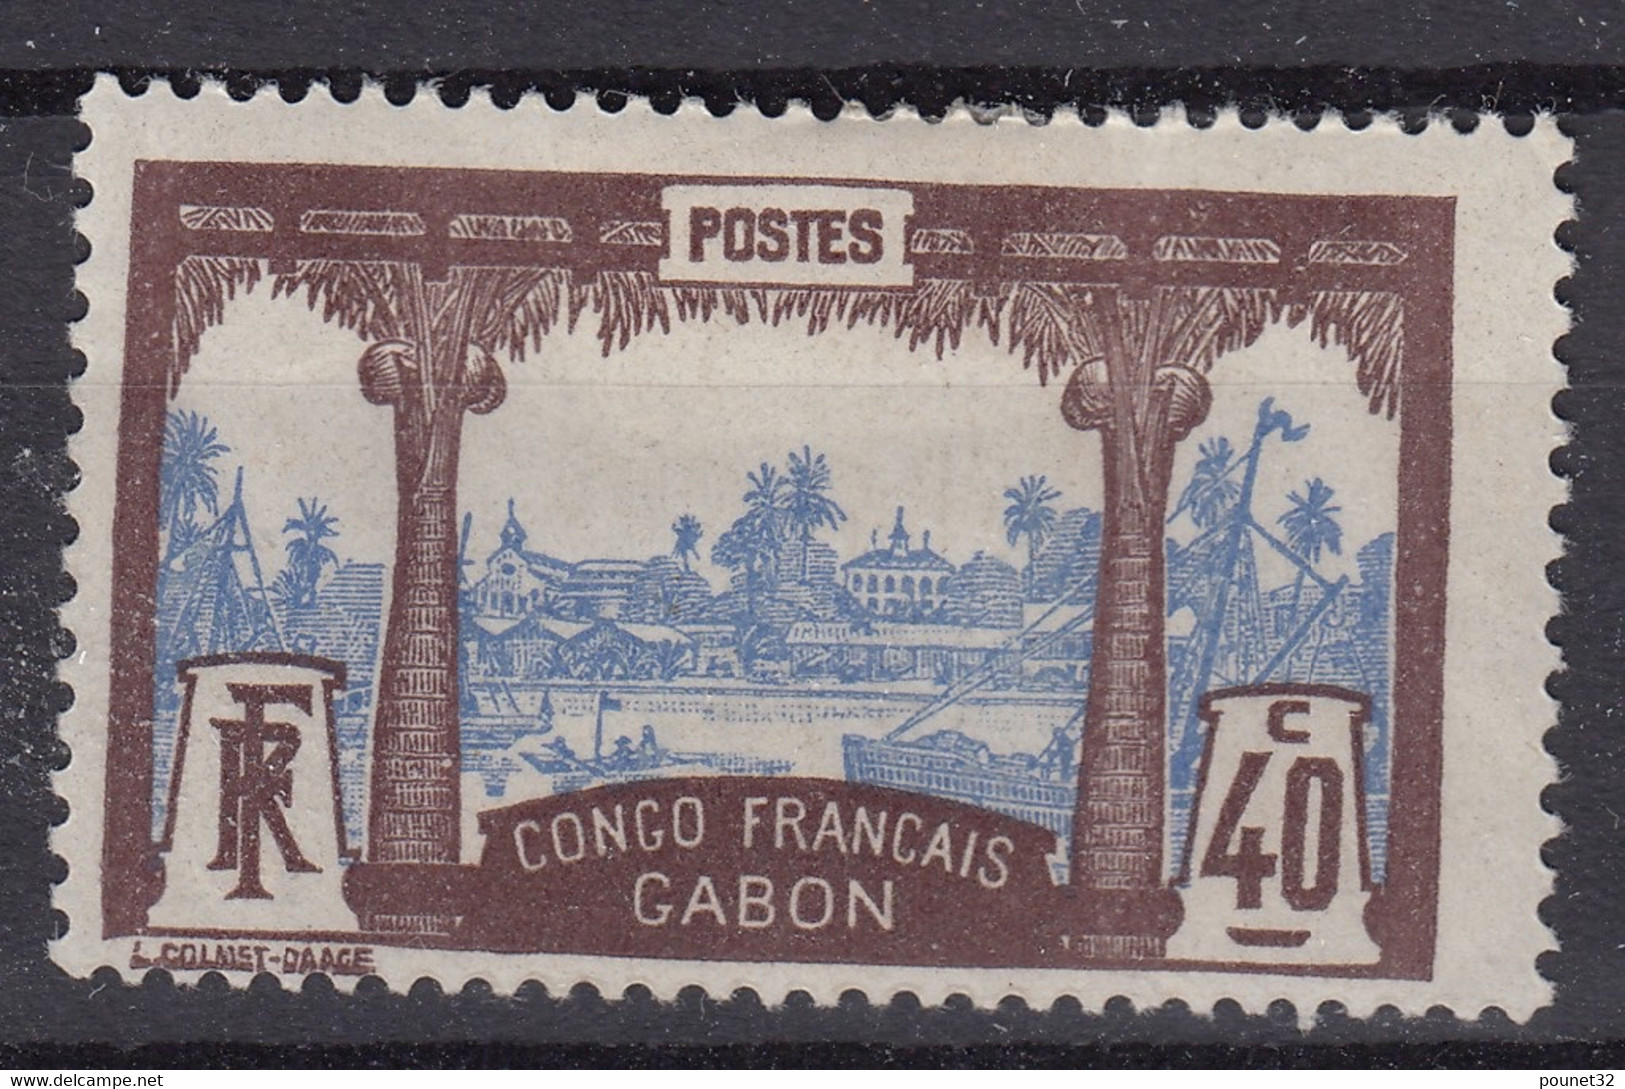 GABON : CONGO FRANCAIS 40c BRUN & BLEU N° 42 NEUF * GOMME AVEC CHARNIERE FORTE - Nuevos